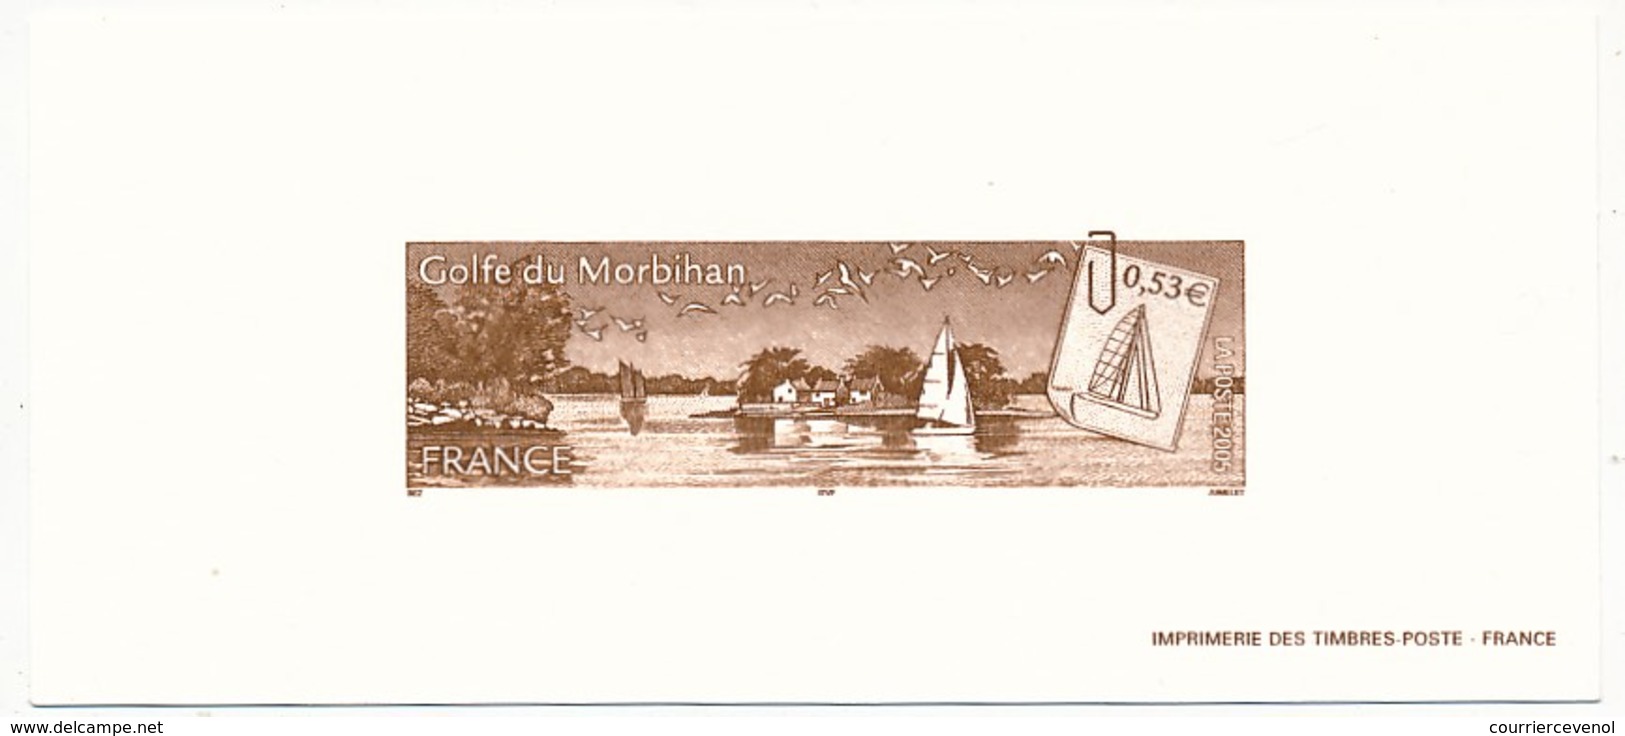 FRANCE - Gravure Du Timbre 0,53E Golfe Du Morbihan - Luxury Proofs